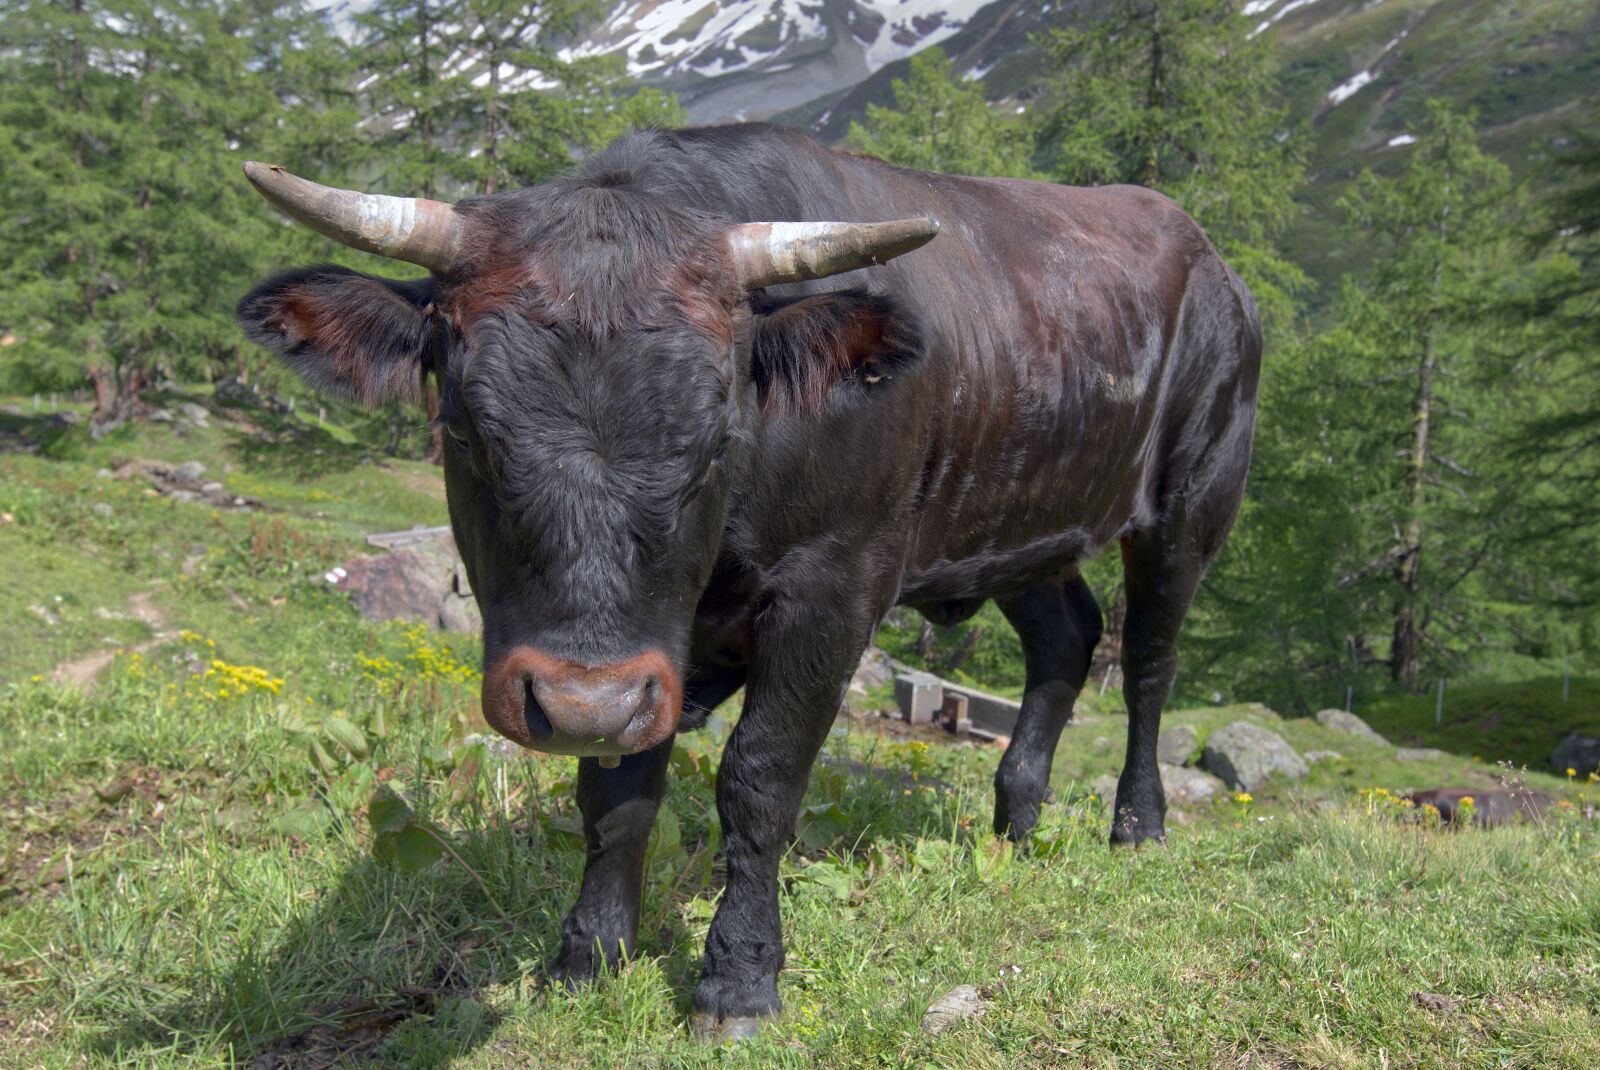 Pentax KP sample photo. Bull, cow, animal photography